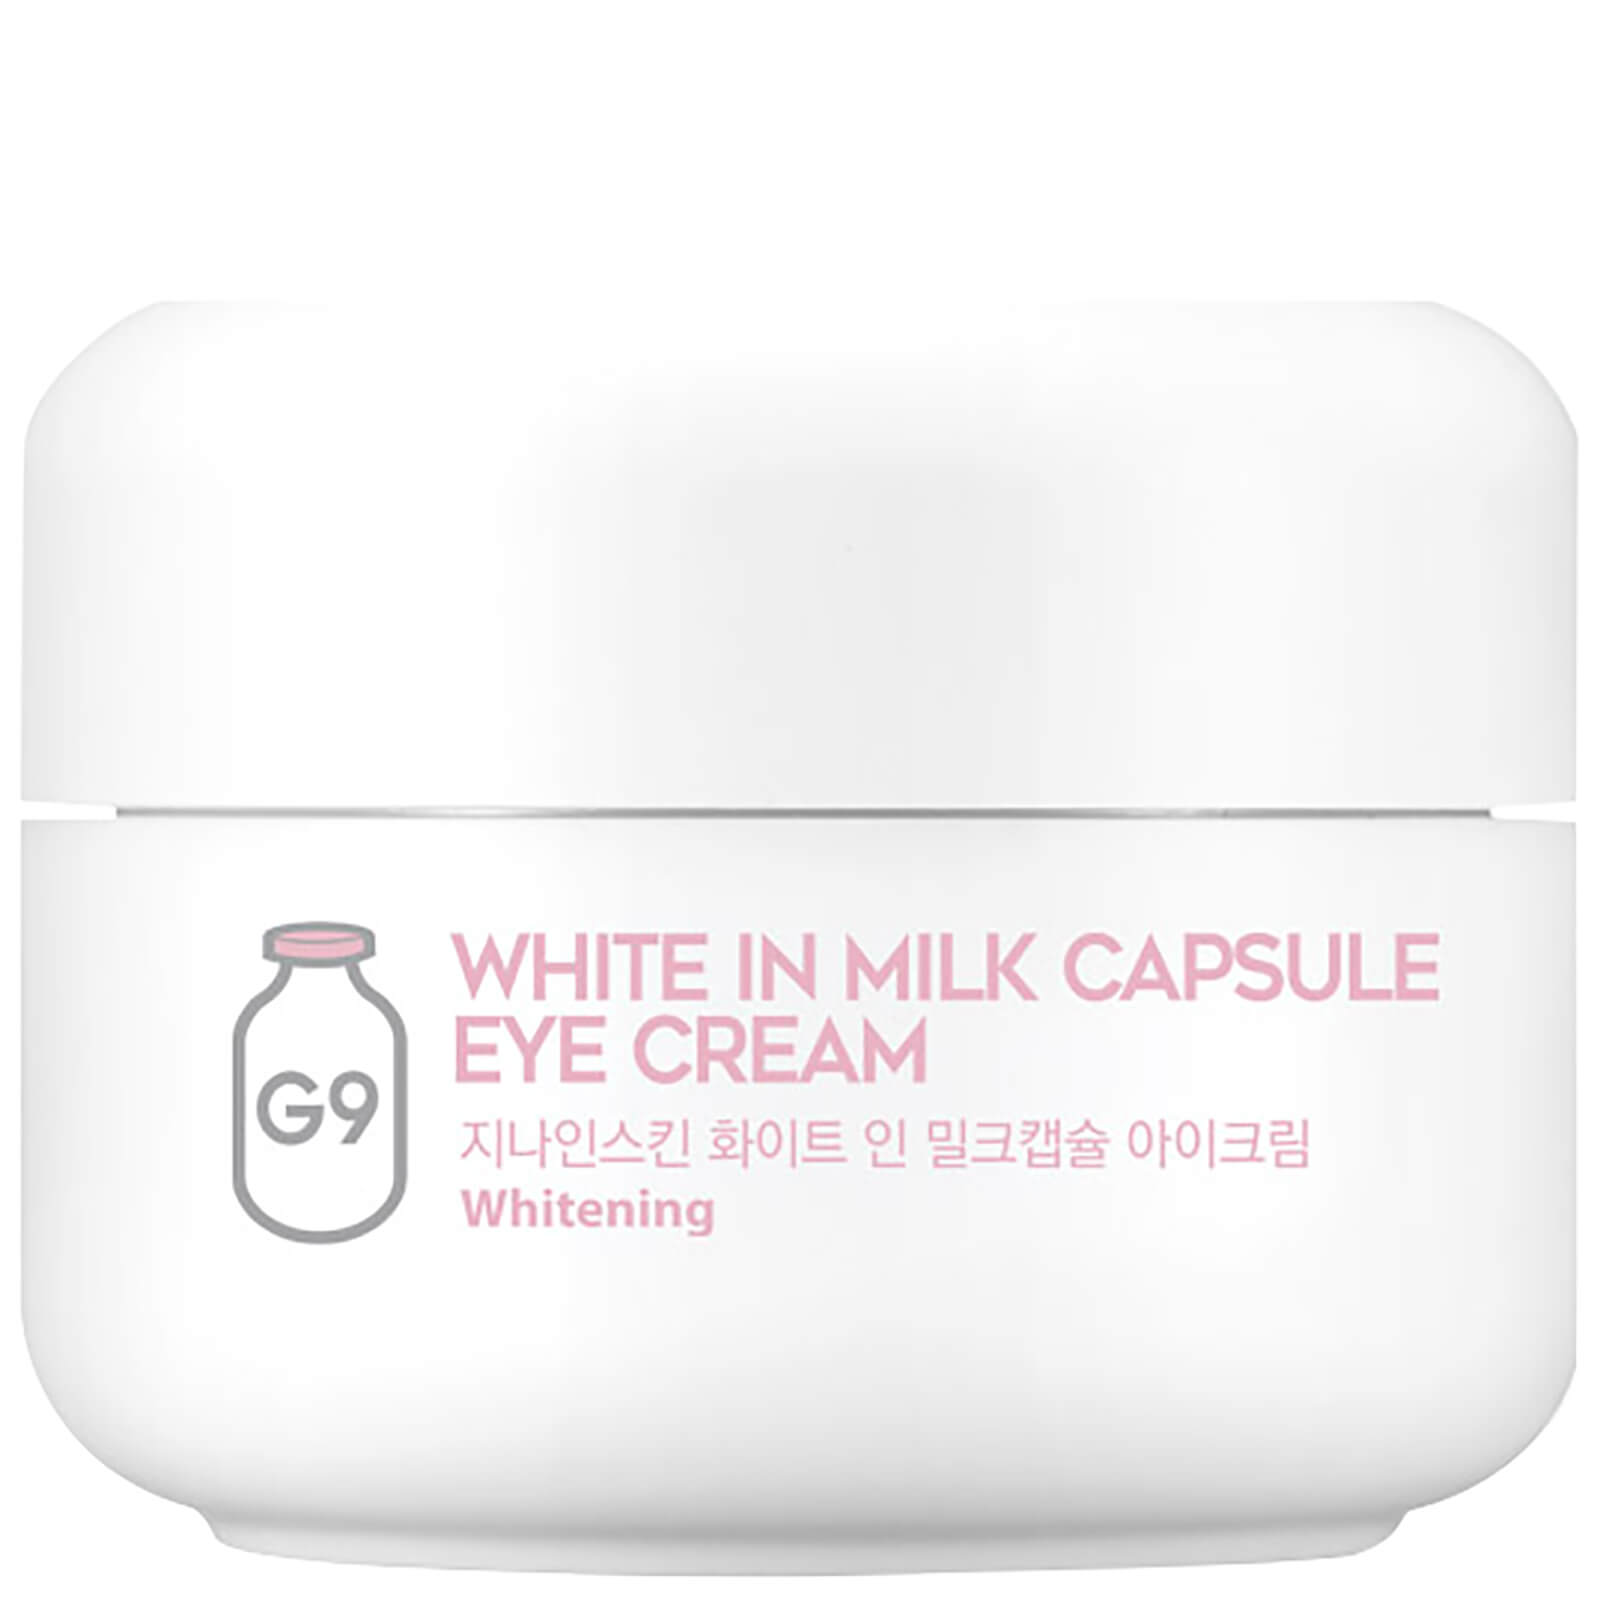 GSkin White In Milk Capsule Eye Cream